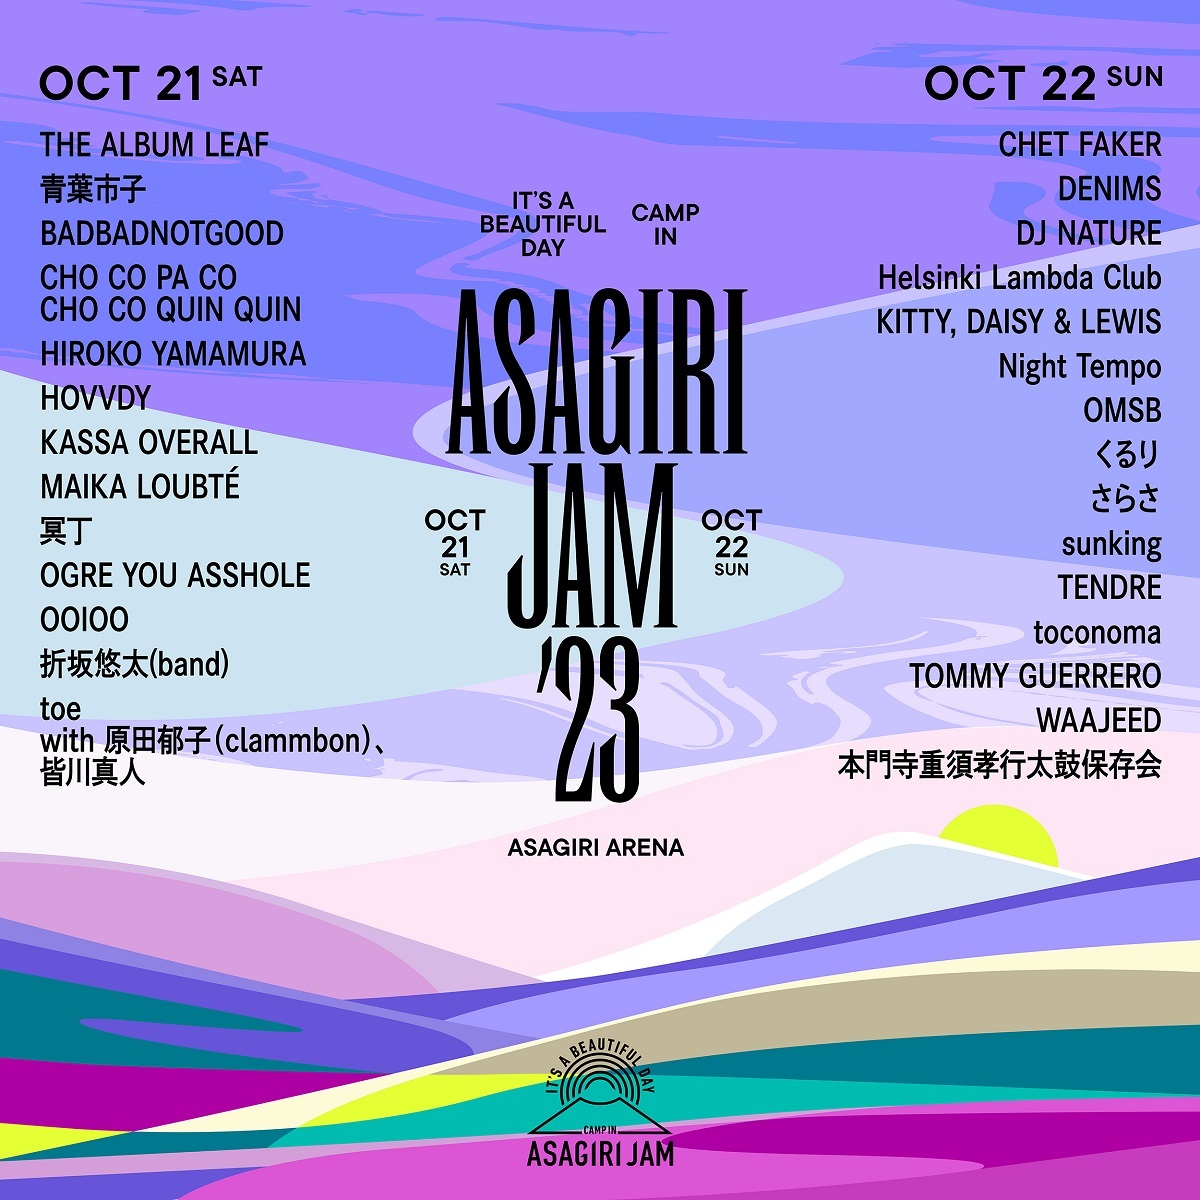 『It’s a beautiful day～Camp in ASAGIRI JAM'23』